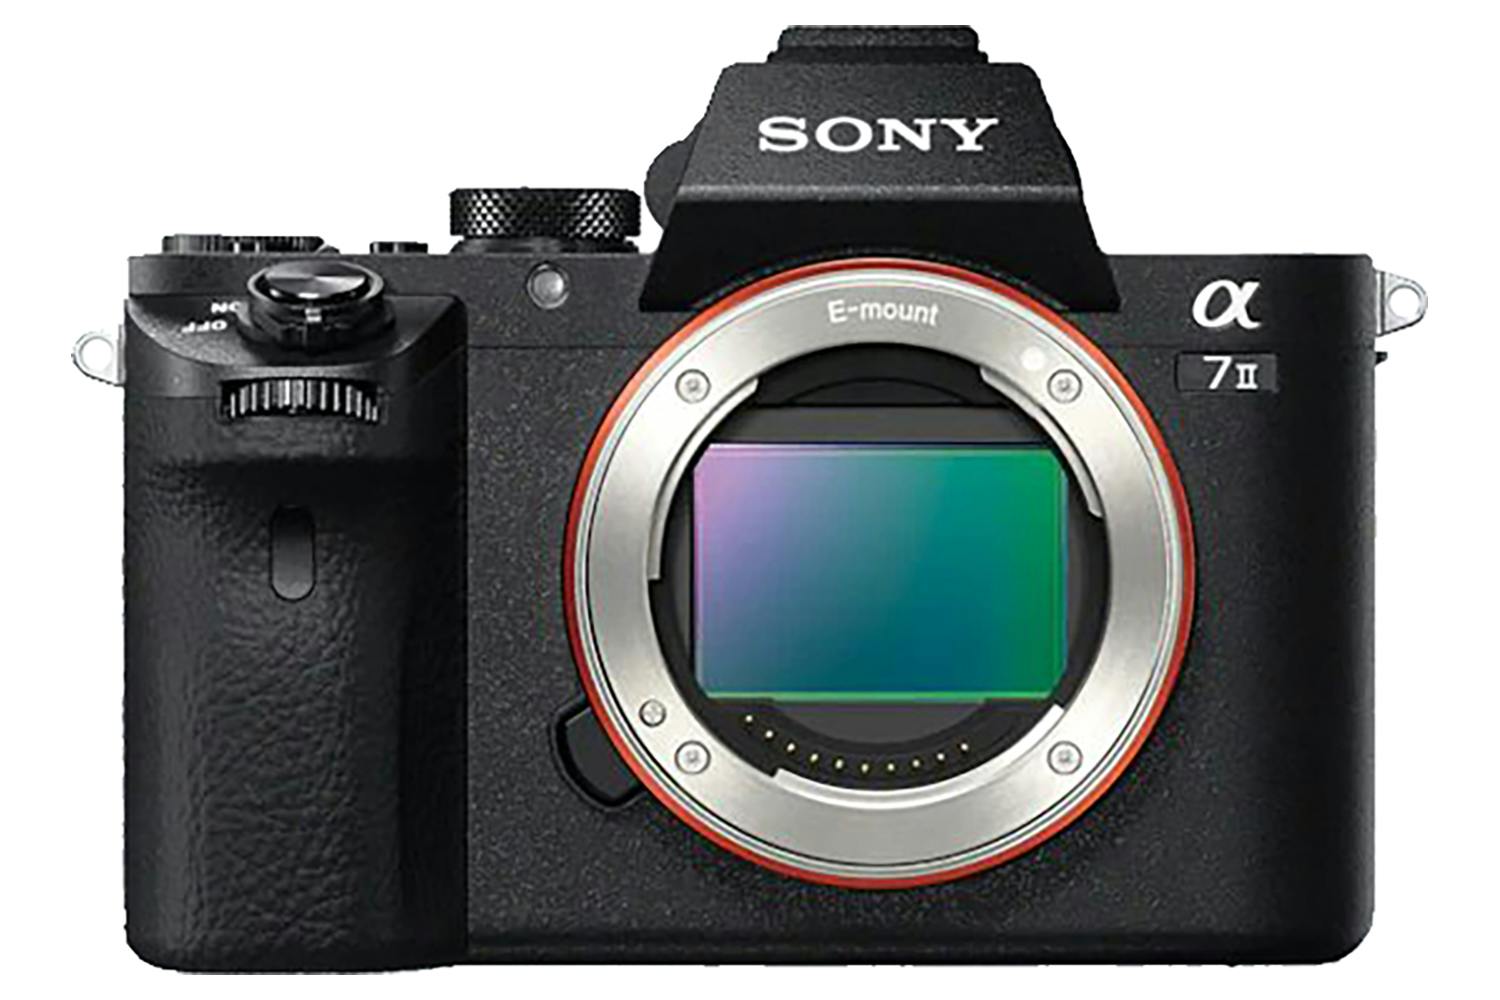 Sony Alpha 7 II E-Mount Camera with Full Frame Sensor